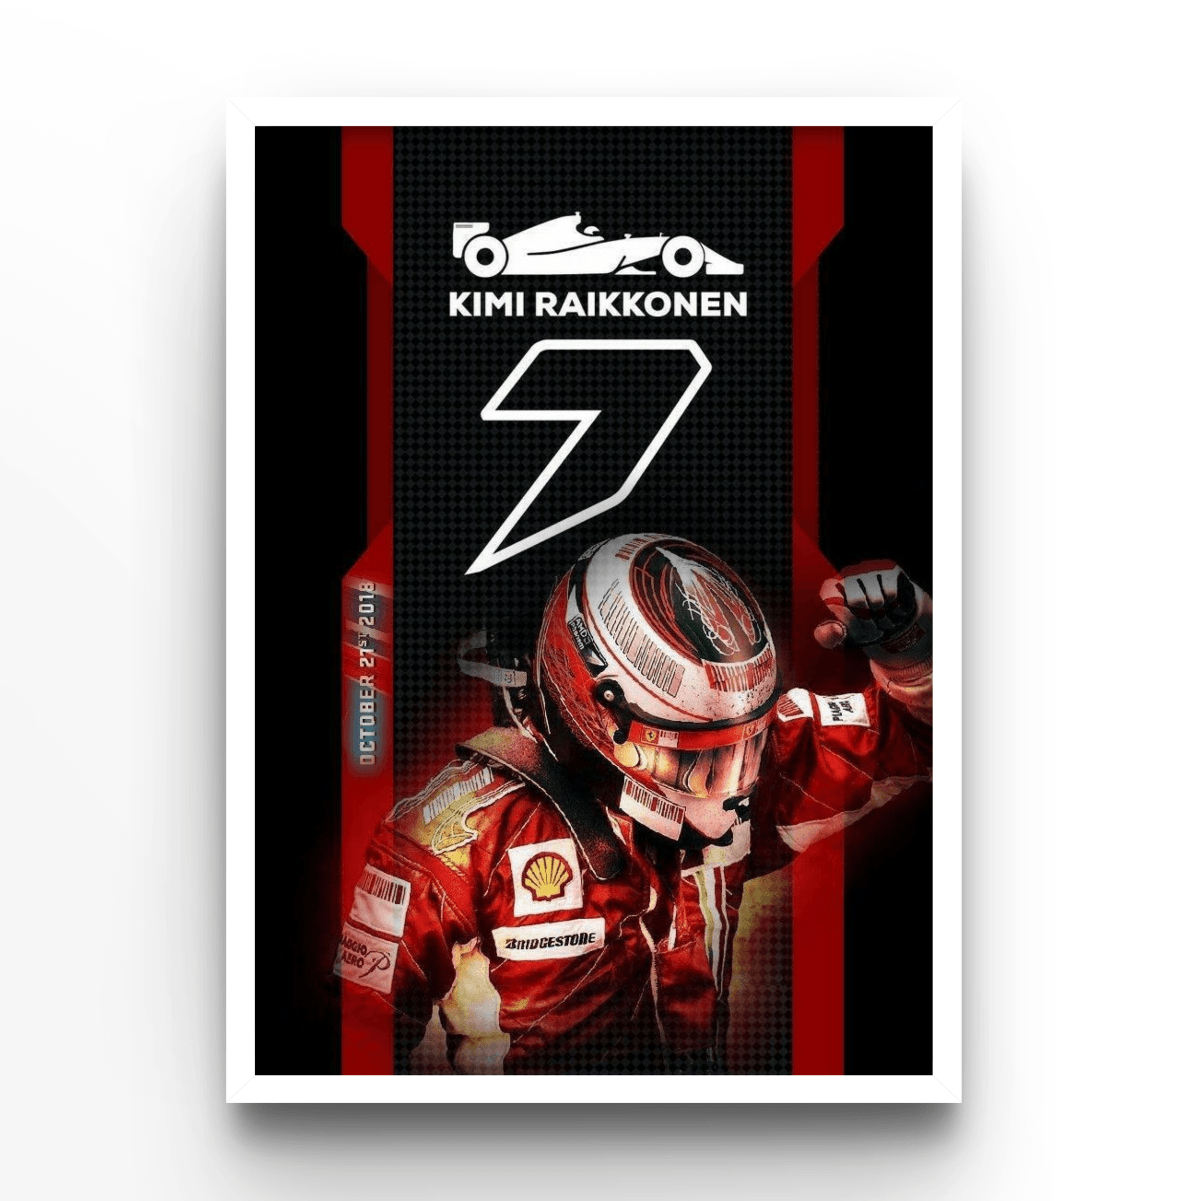 Kimi Räikkönen 2 - A4, A3, A2 Posters Base - Poster Print Shop / Art Prints / PostersBase